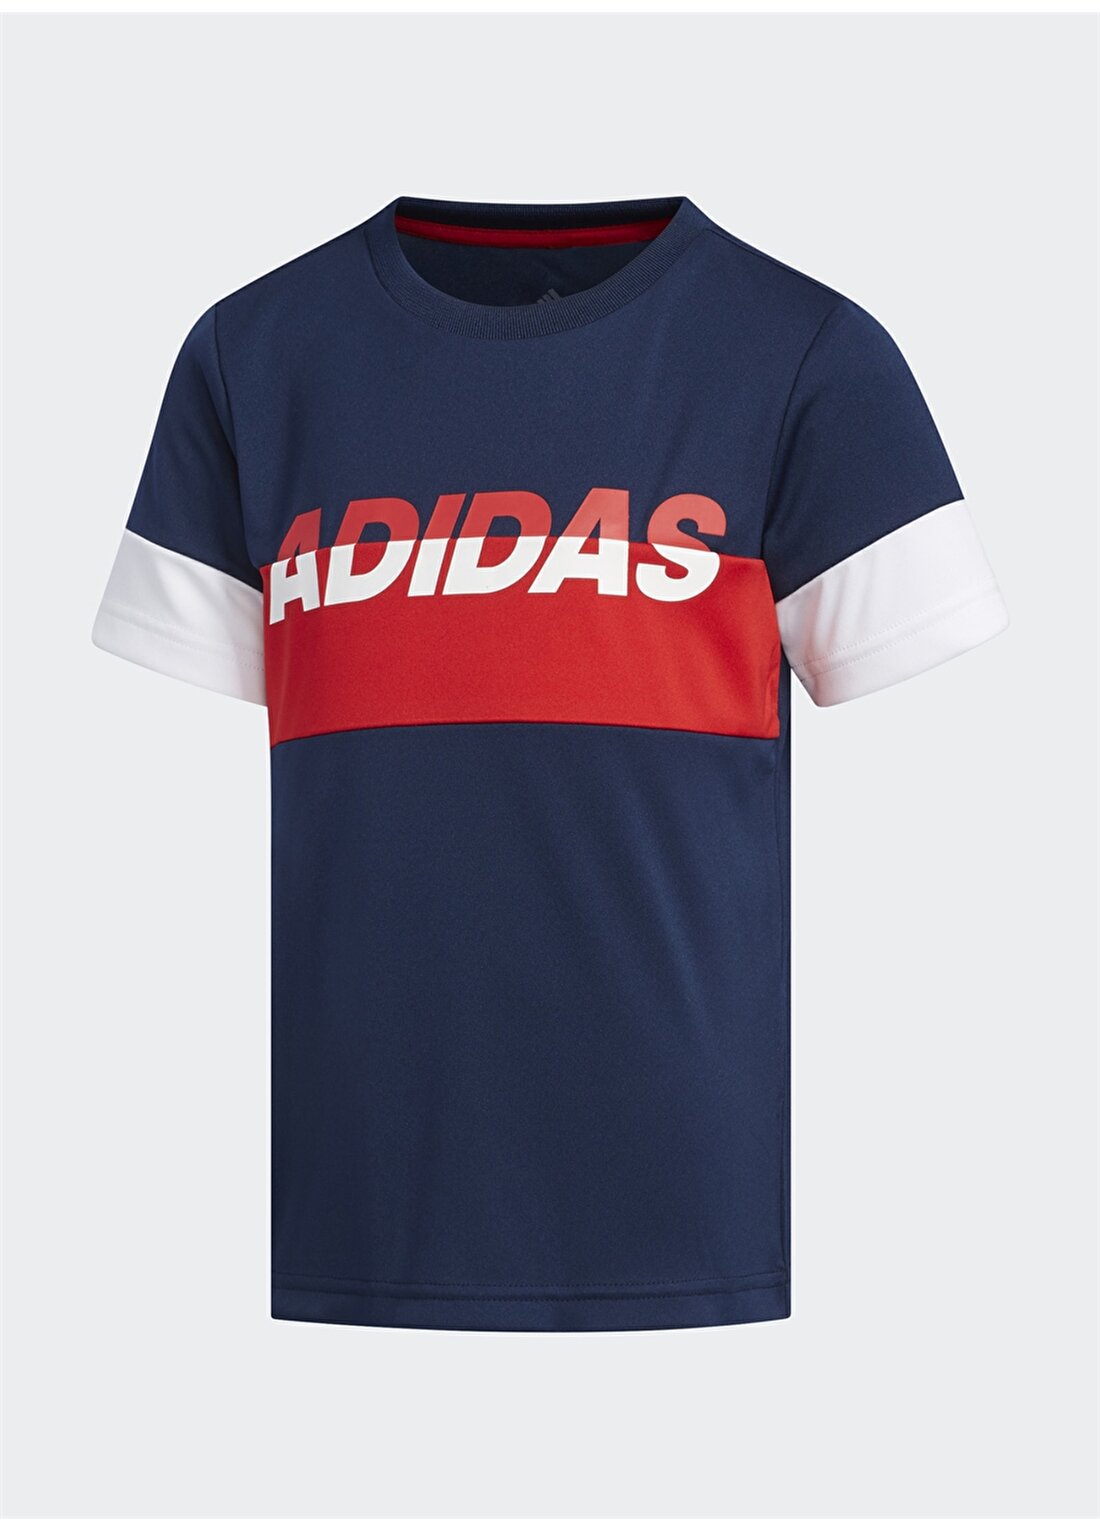 Adidas EH4045 Graphic T-Shirt